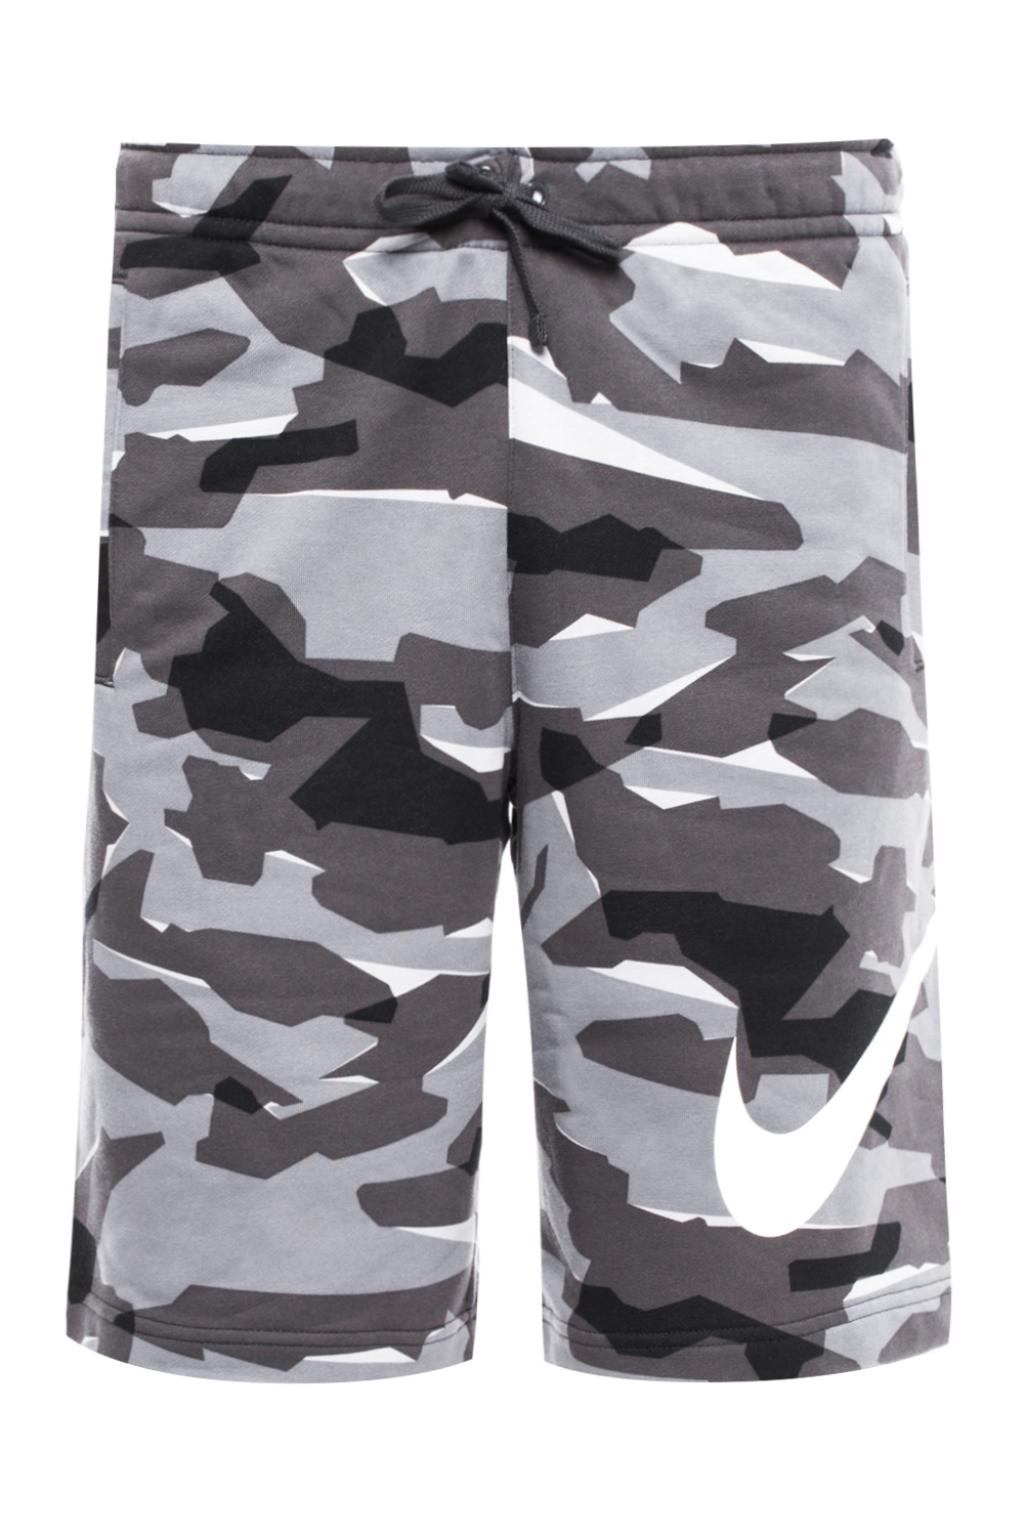 nike grey camo shorts